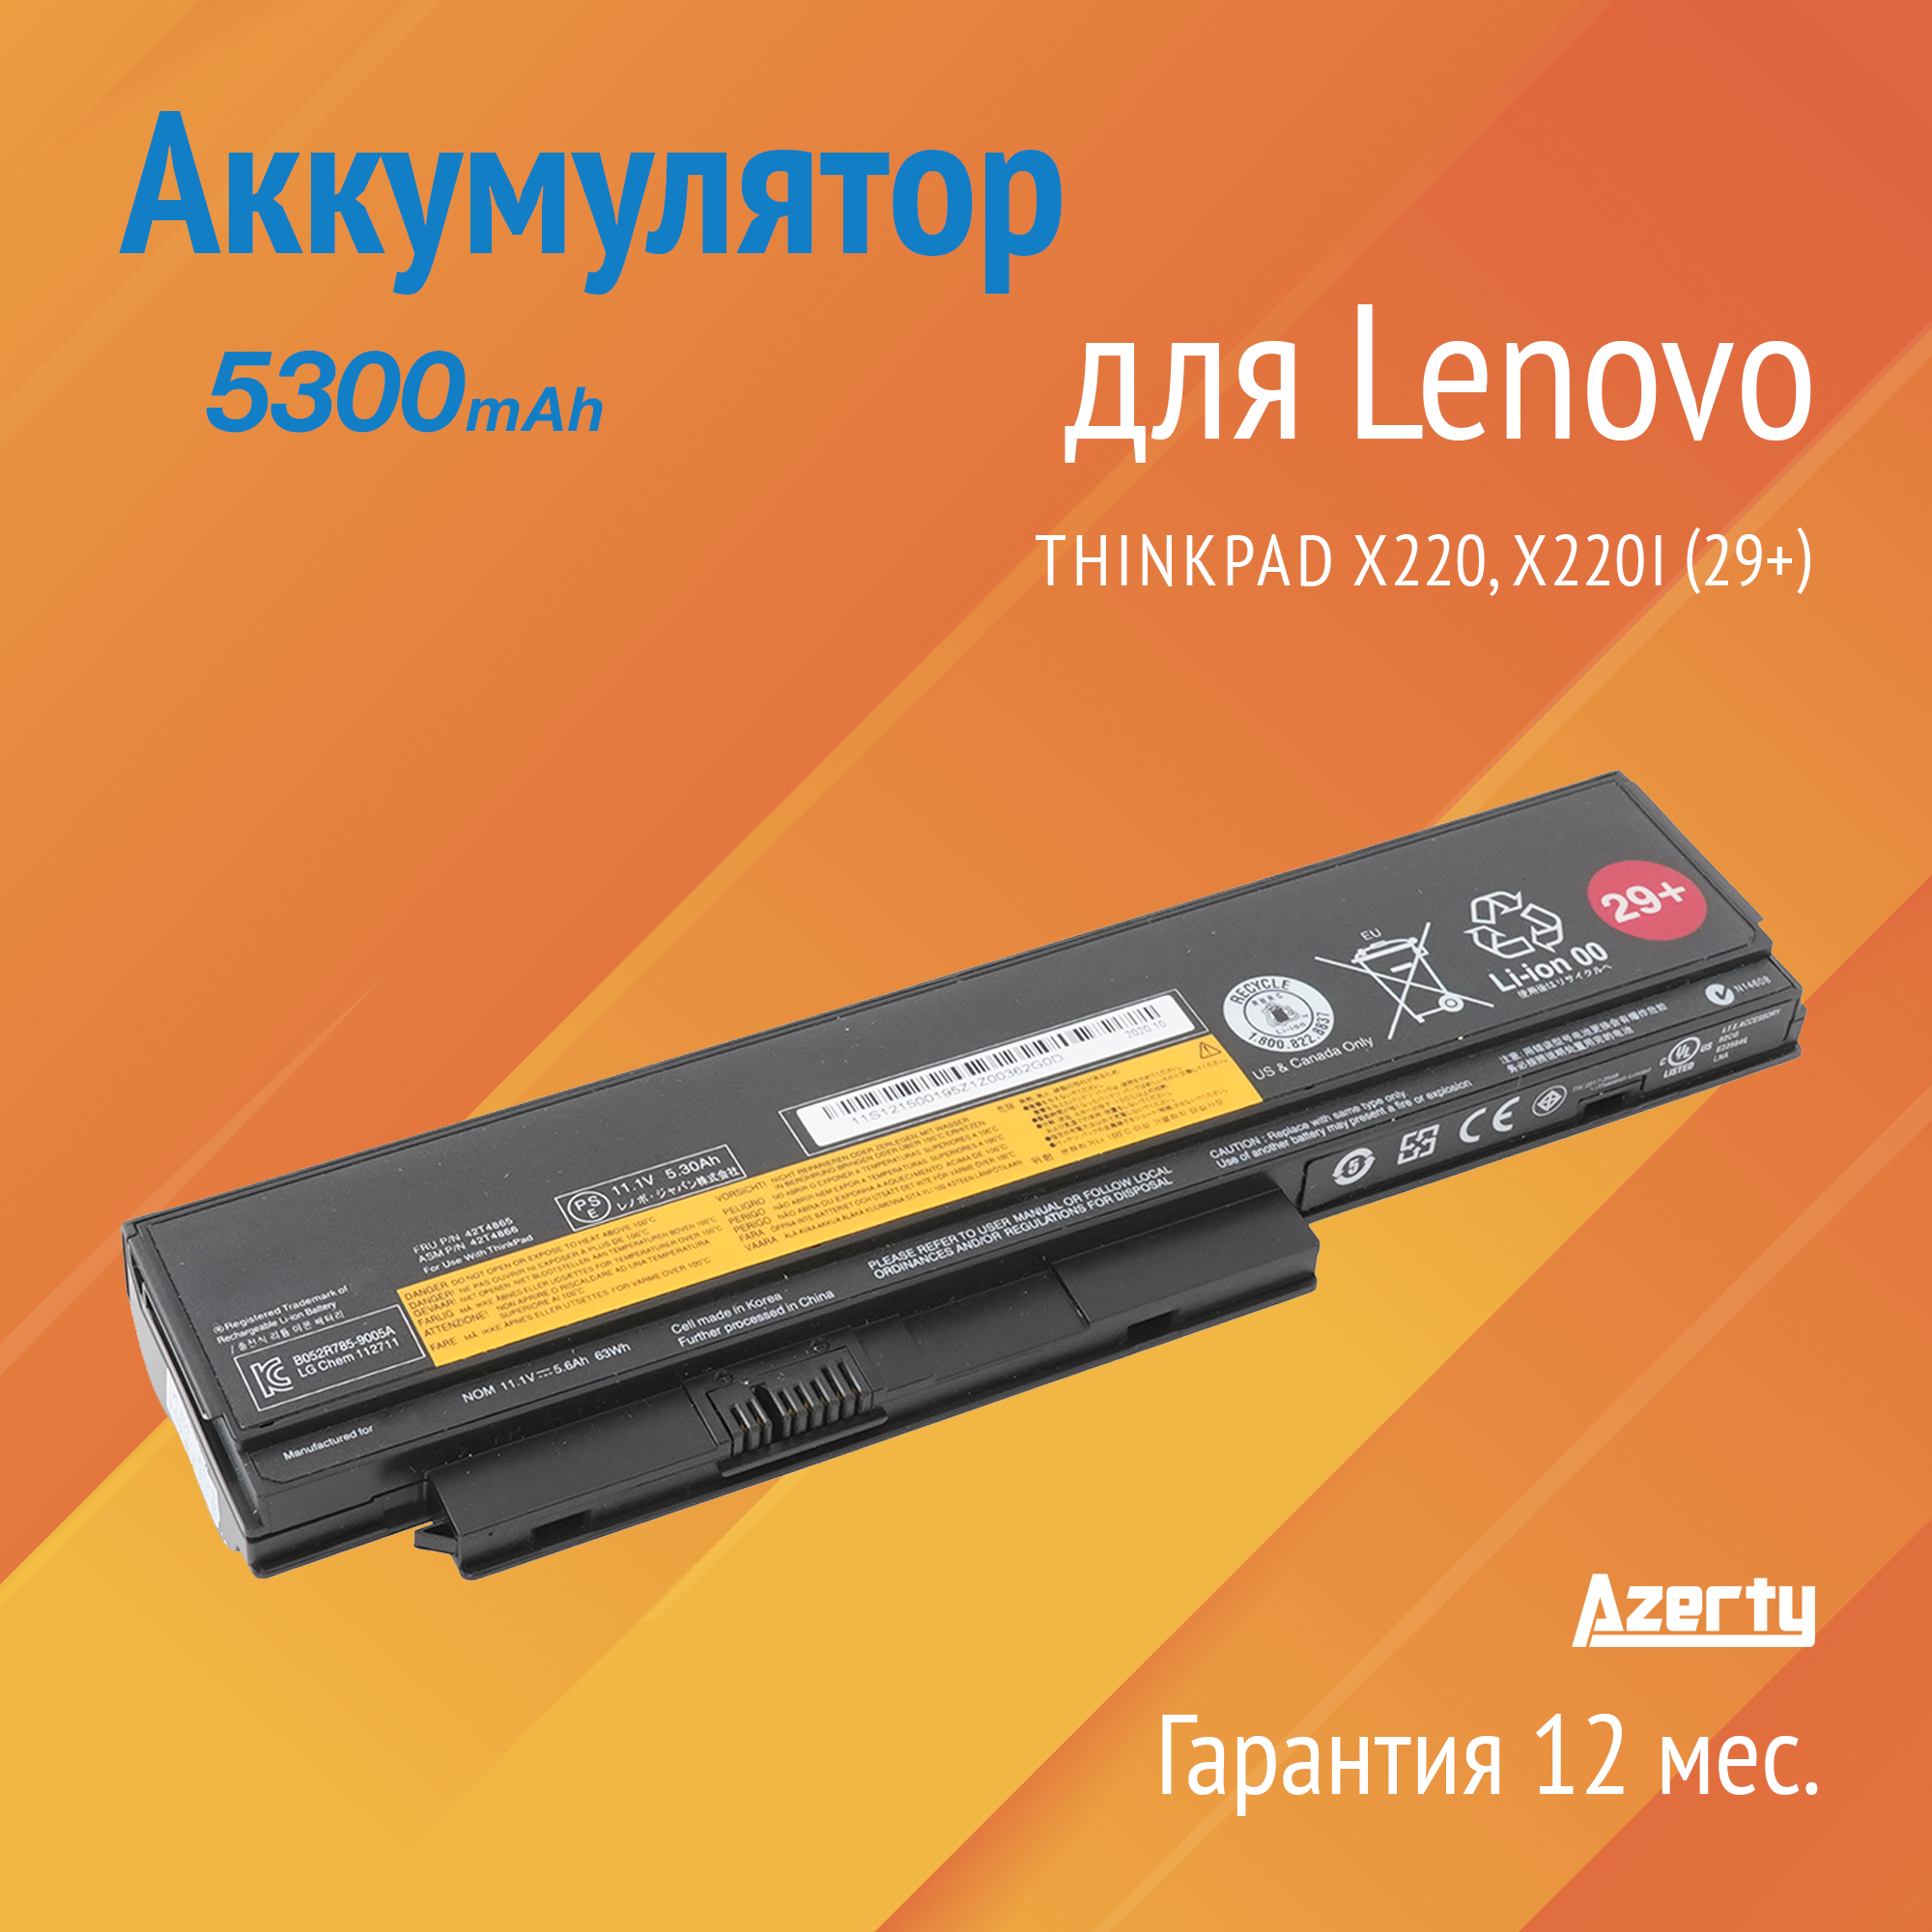 Аккумулятор 42T4865 для Lenovo ThinkPad X220 / X220i (42T4861 42T4862) 29+